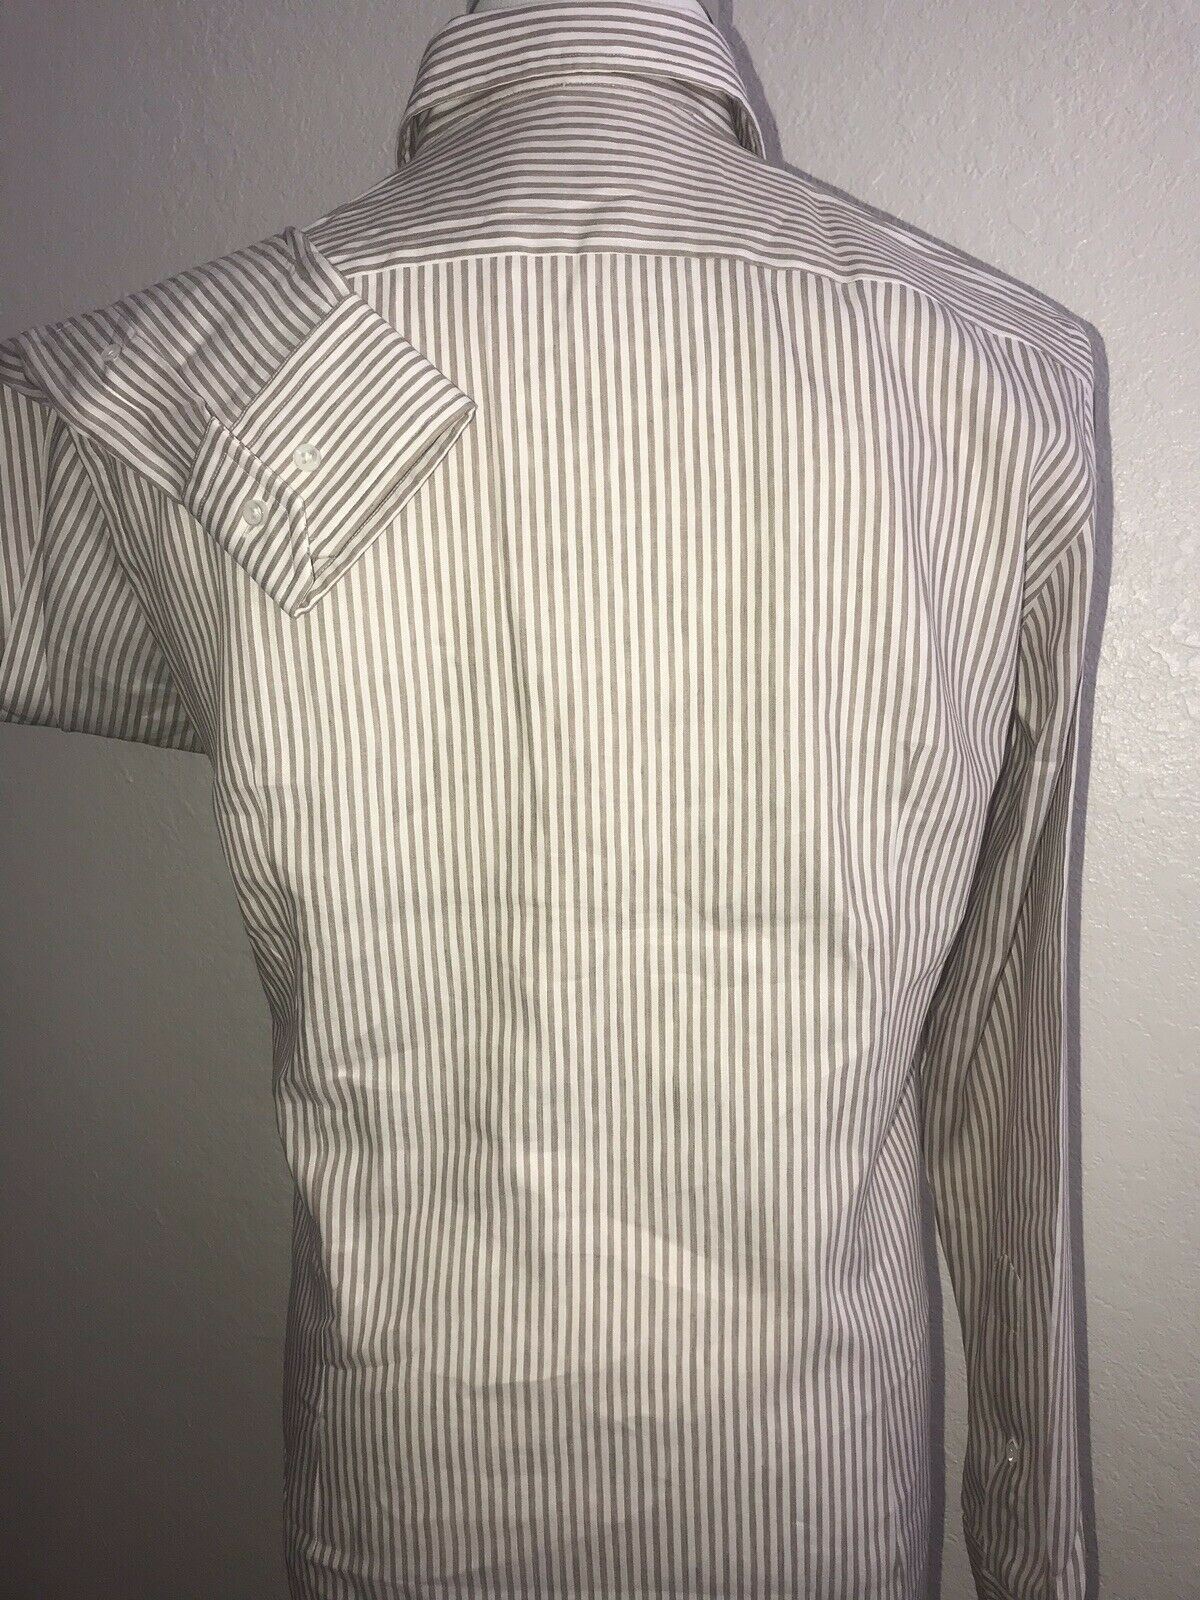 NWT $285 Hugo Boss Mens T-Shan Slim Fit Tailored Brown Dress Shirt Size 41/16